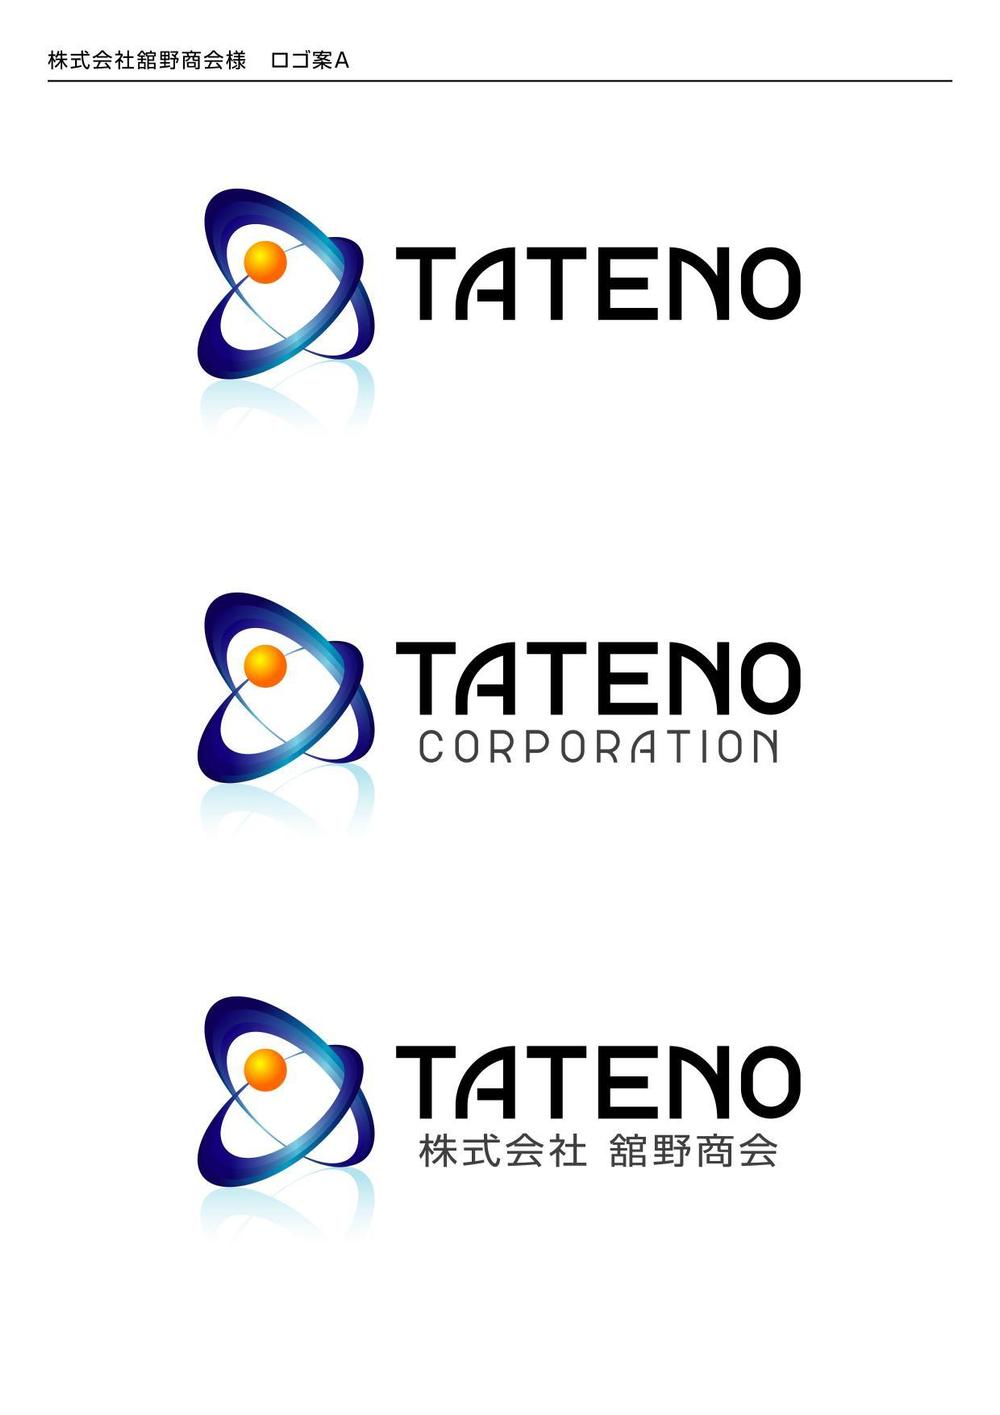 Tateno-A.jpg